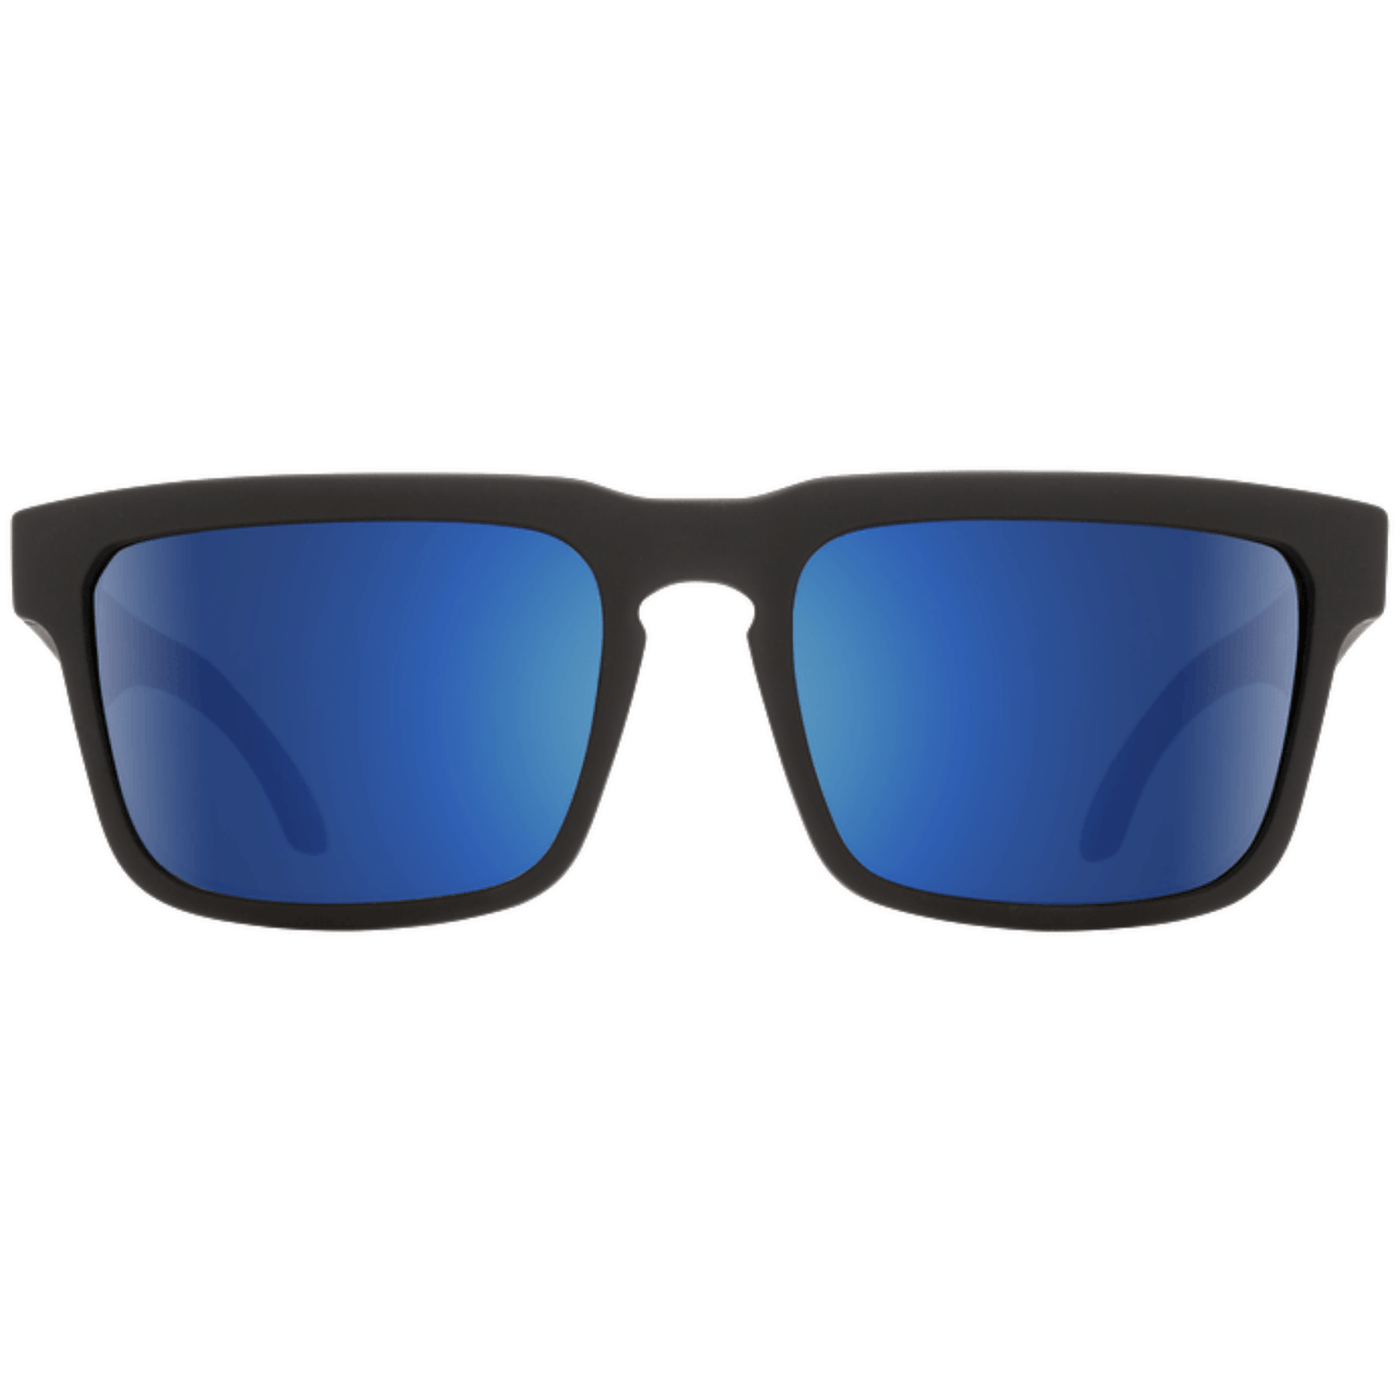 SPY HELM Polarized Sunglasses, Happy Lens - Blue 8Lines Shop - Fast Shipping